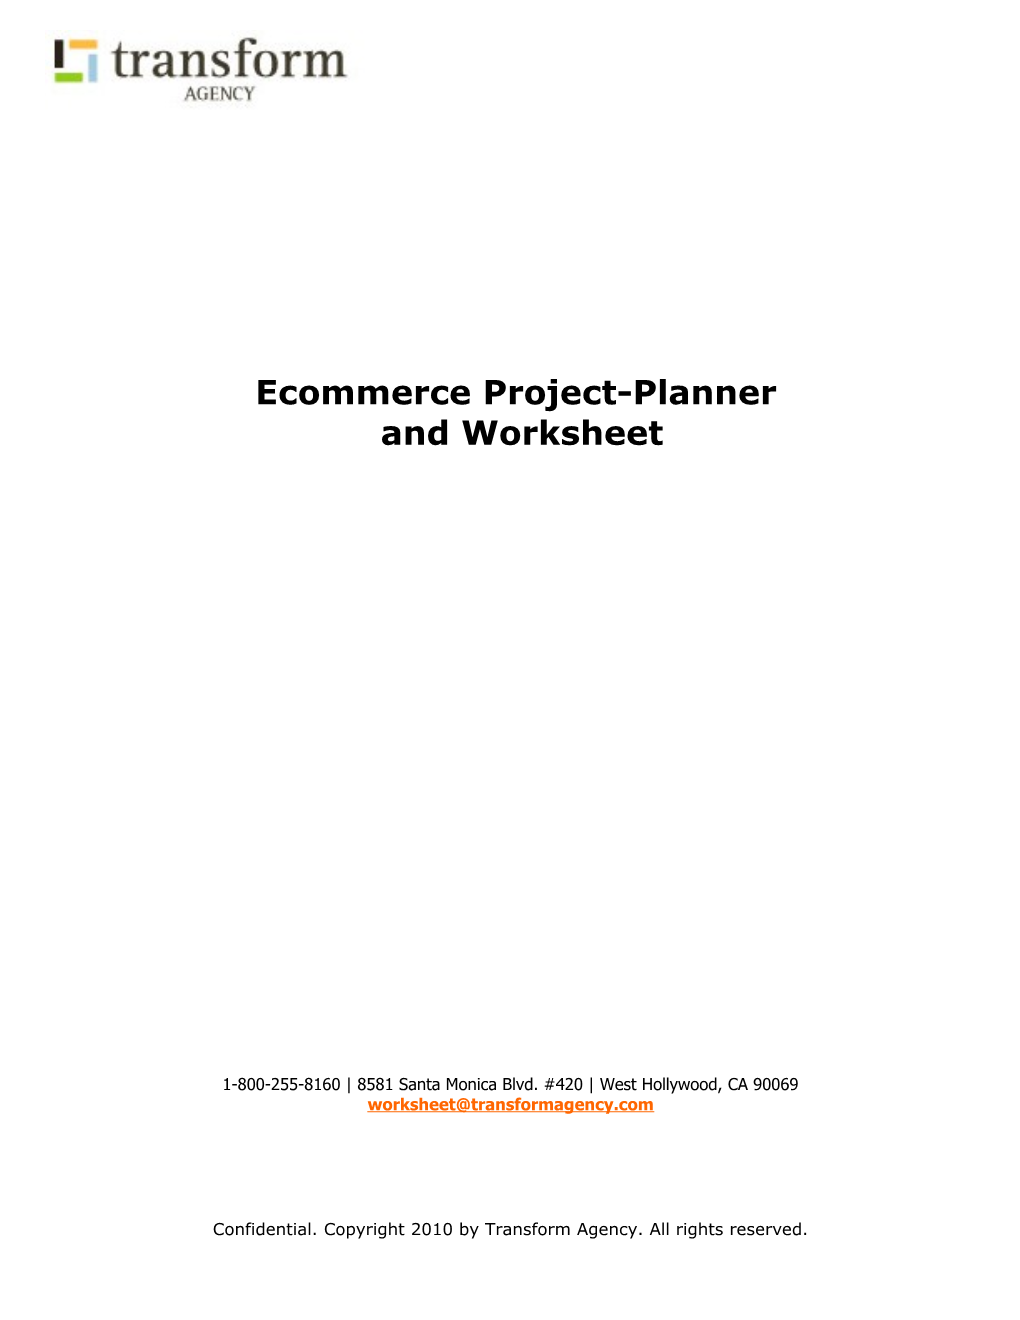 Transformagency Ecommerce Worksheet